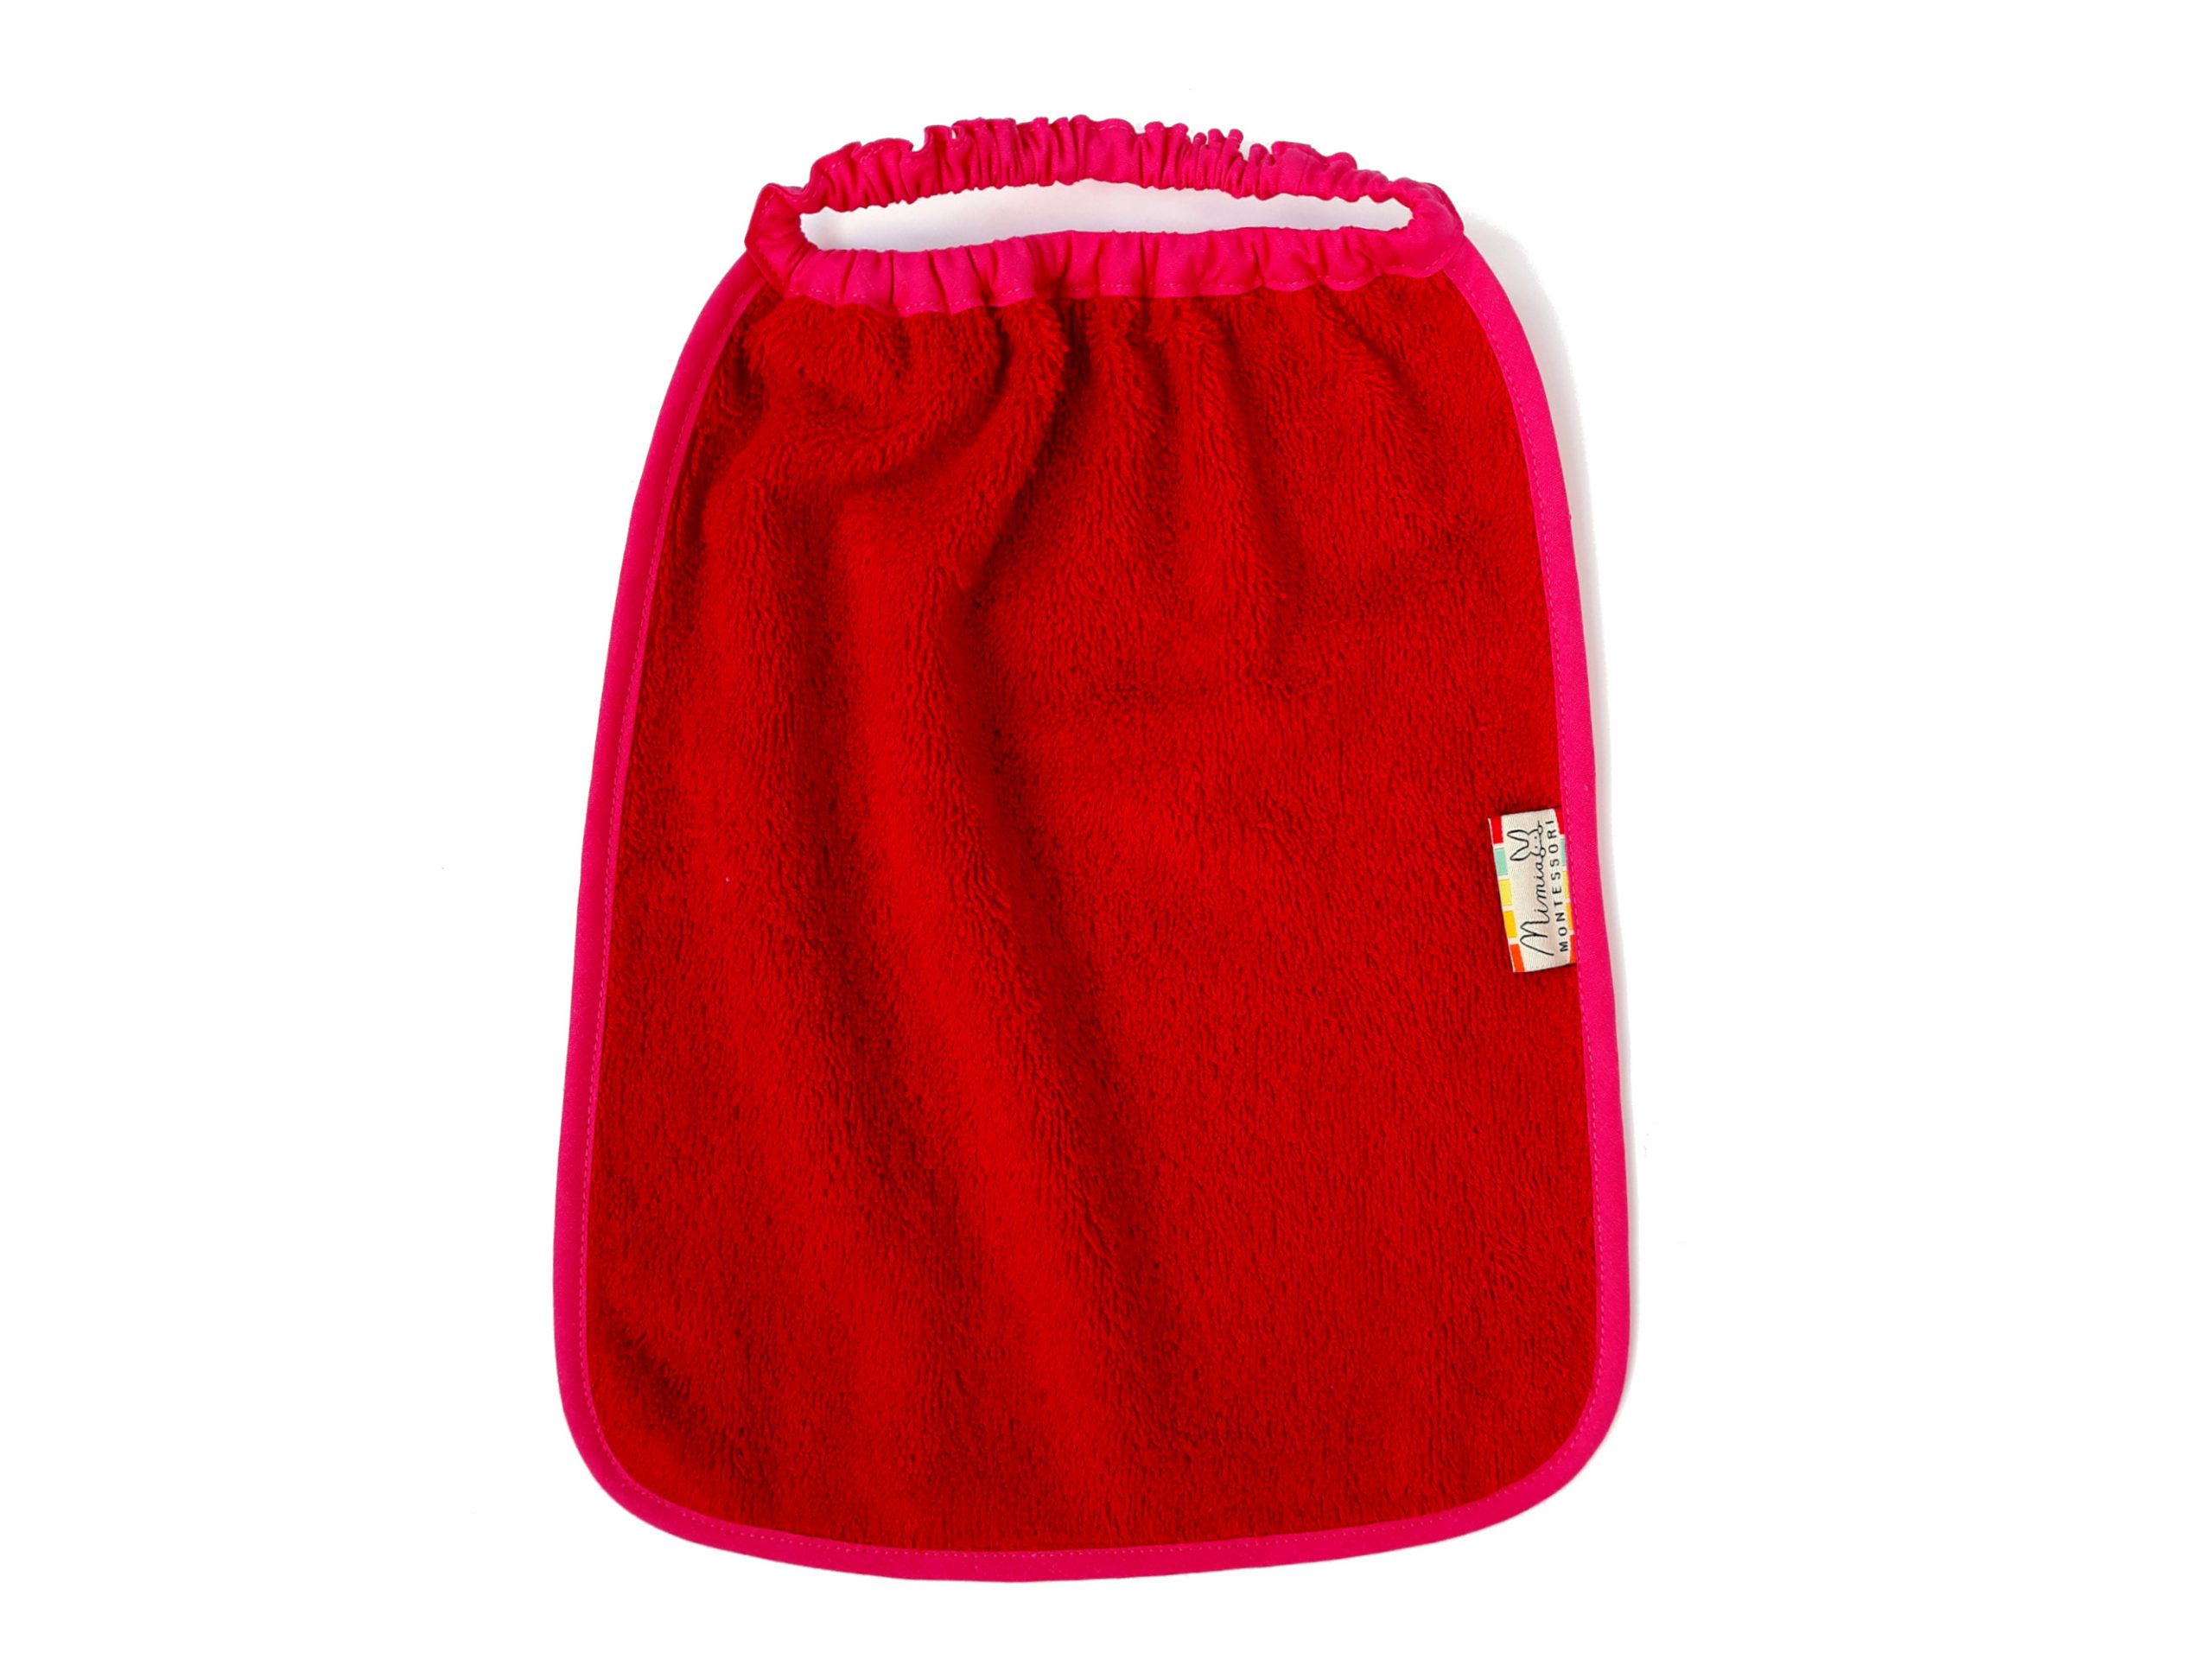 Montessori style bib red terrycloth